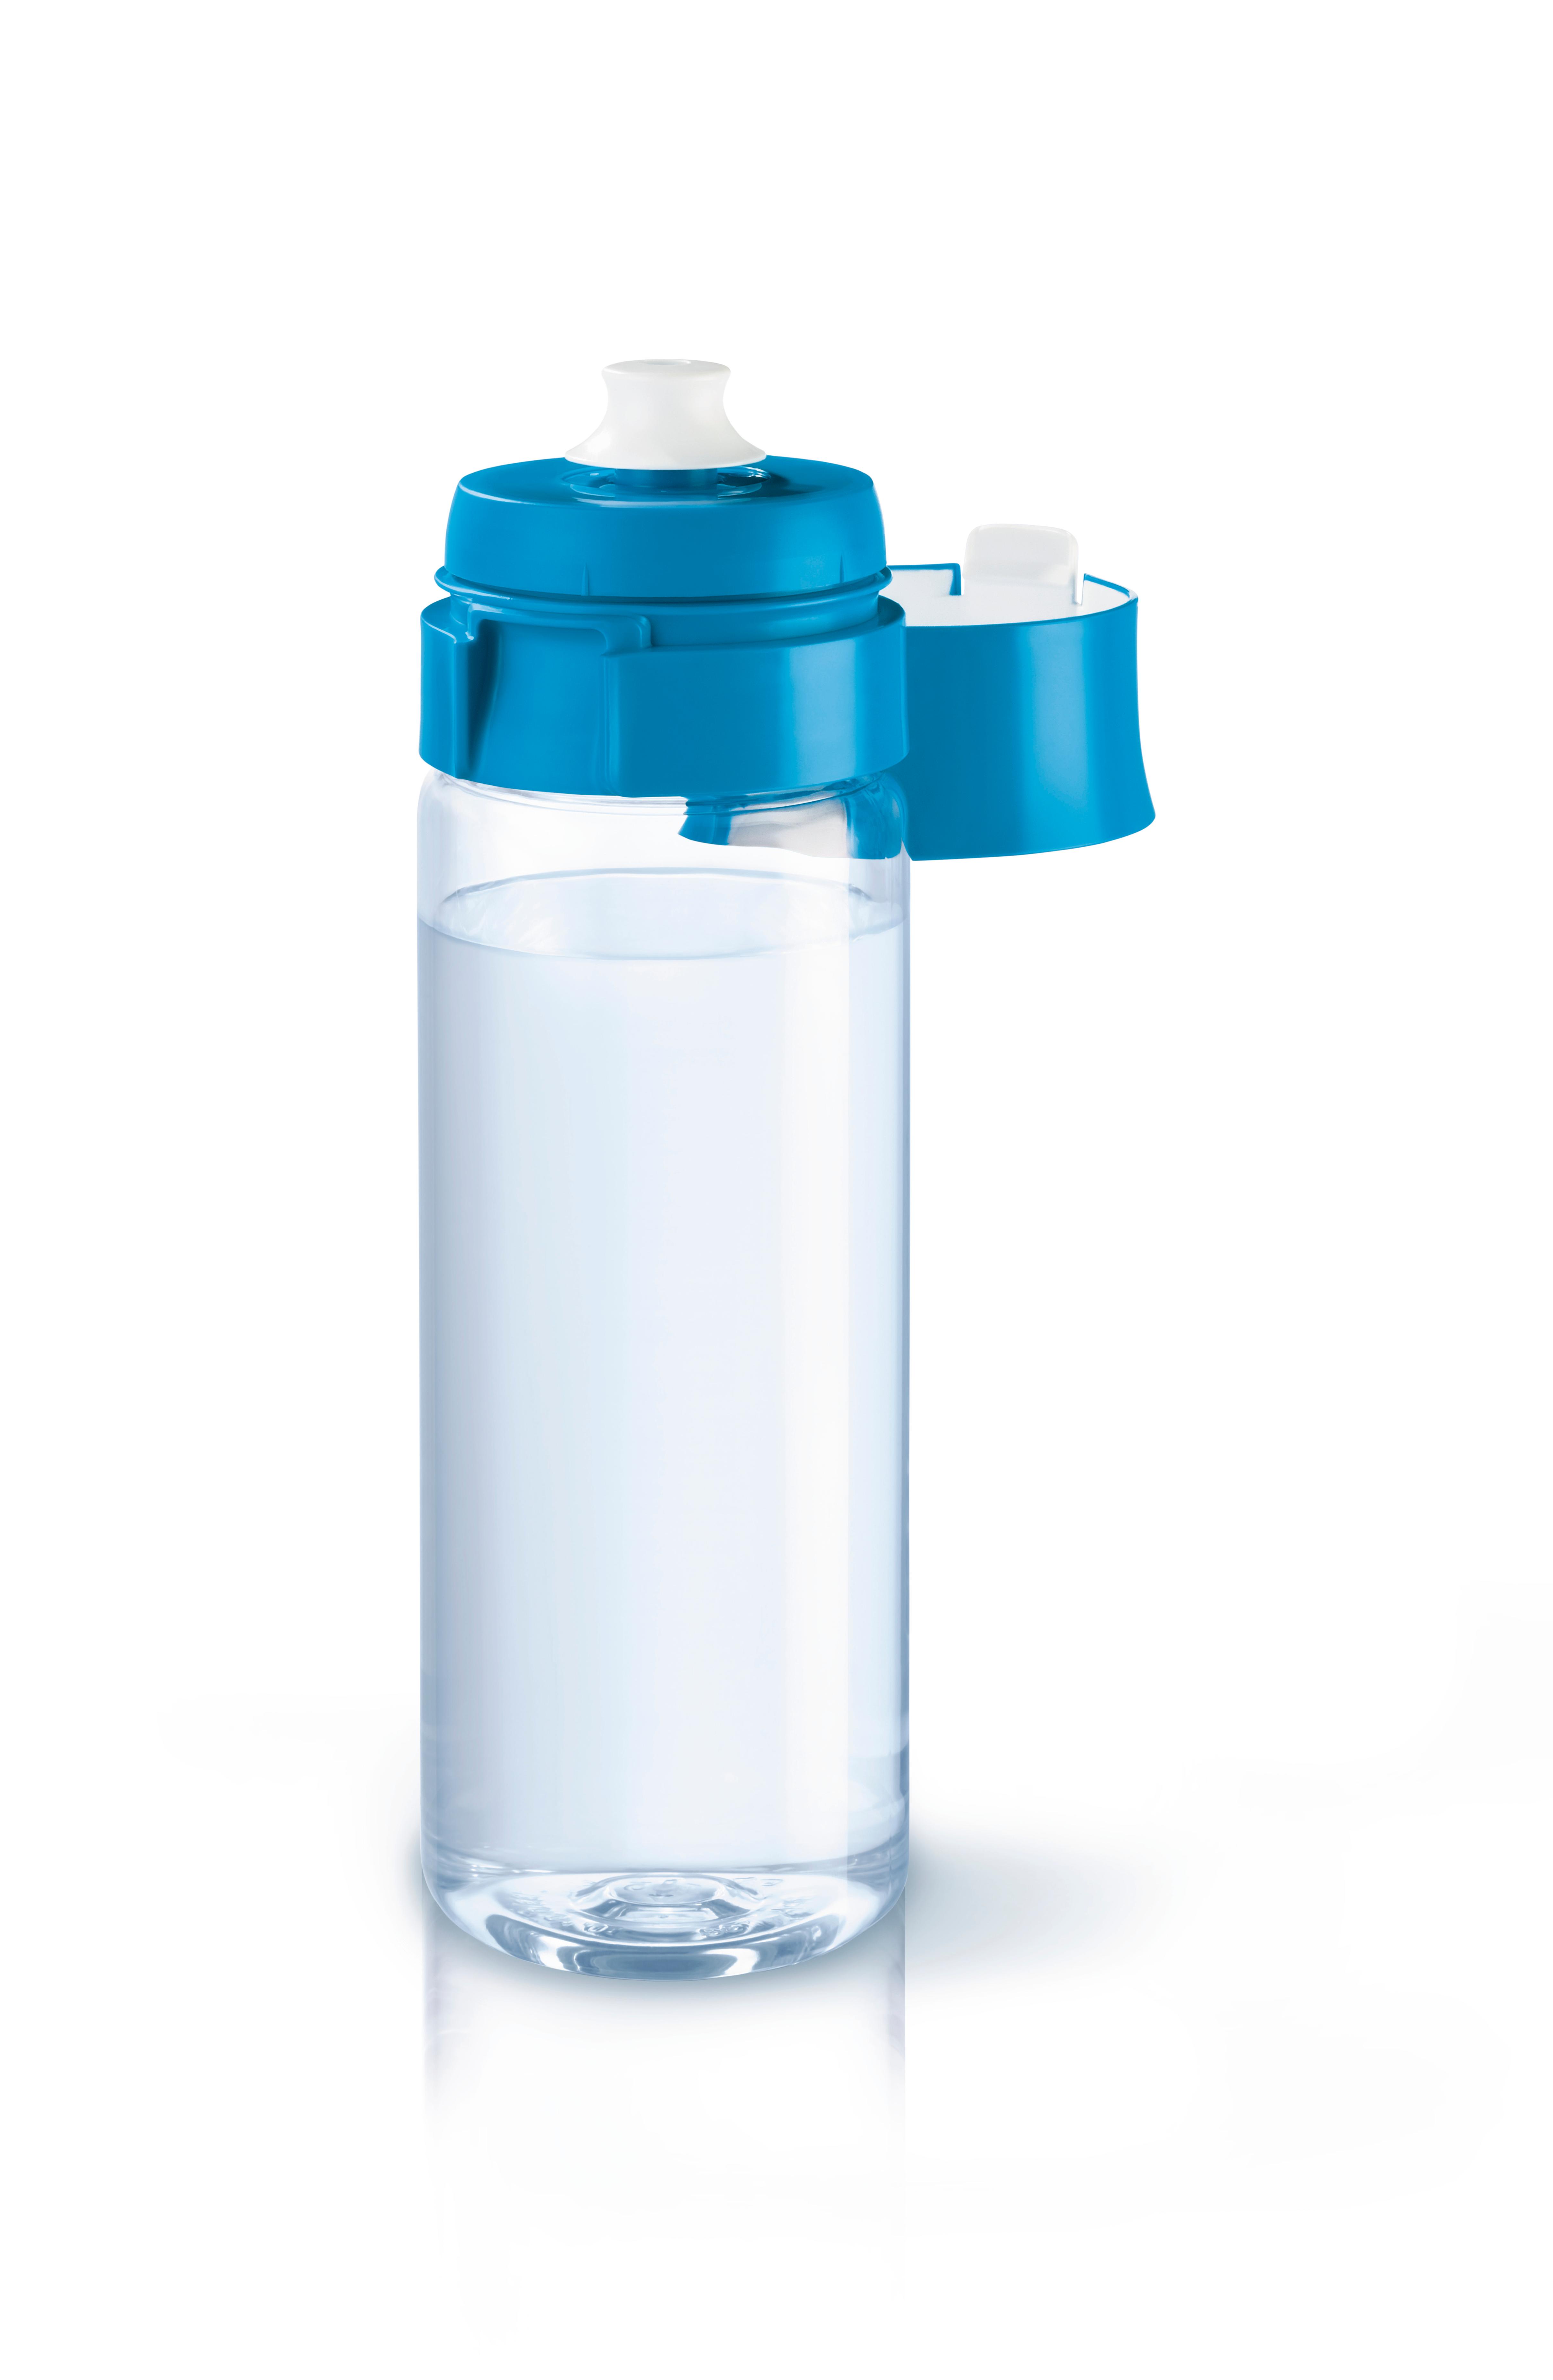 1016334 Brita Fill&go Bottle Filtr Blue Wasserfiltration Flasche Blau Transp ~d~